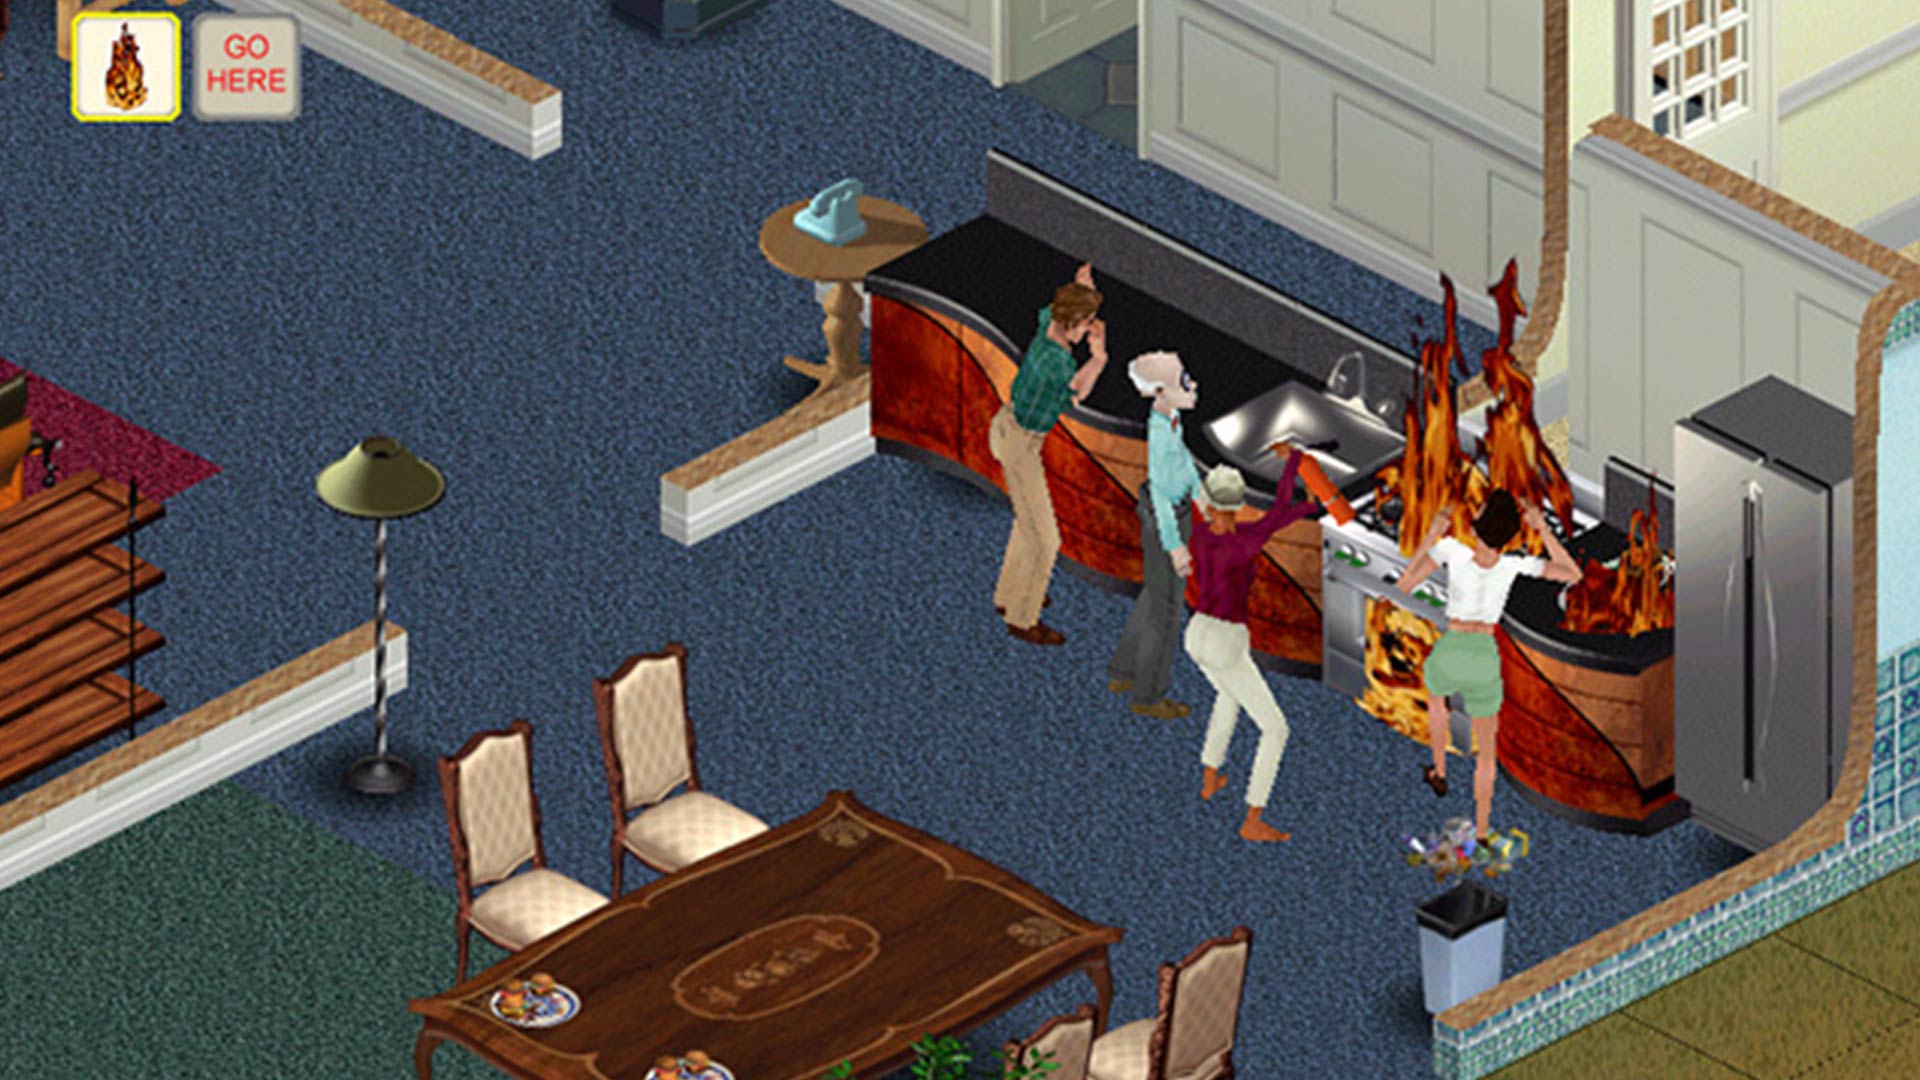 Panik bei den Sims wegen Feuer